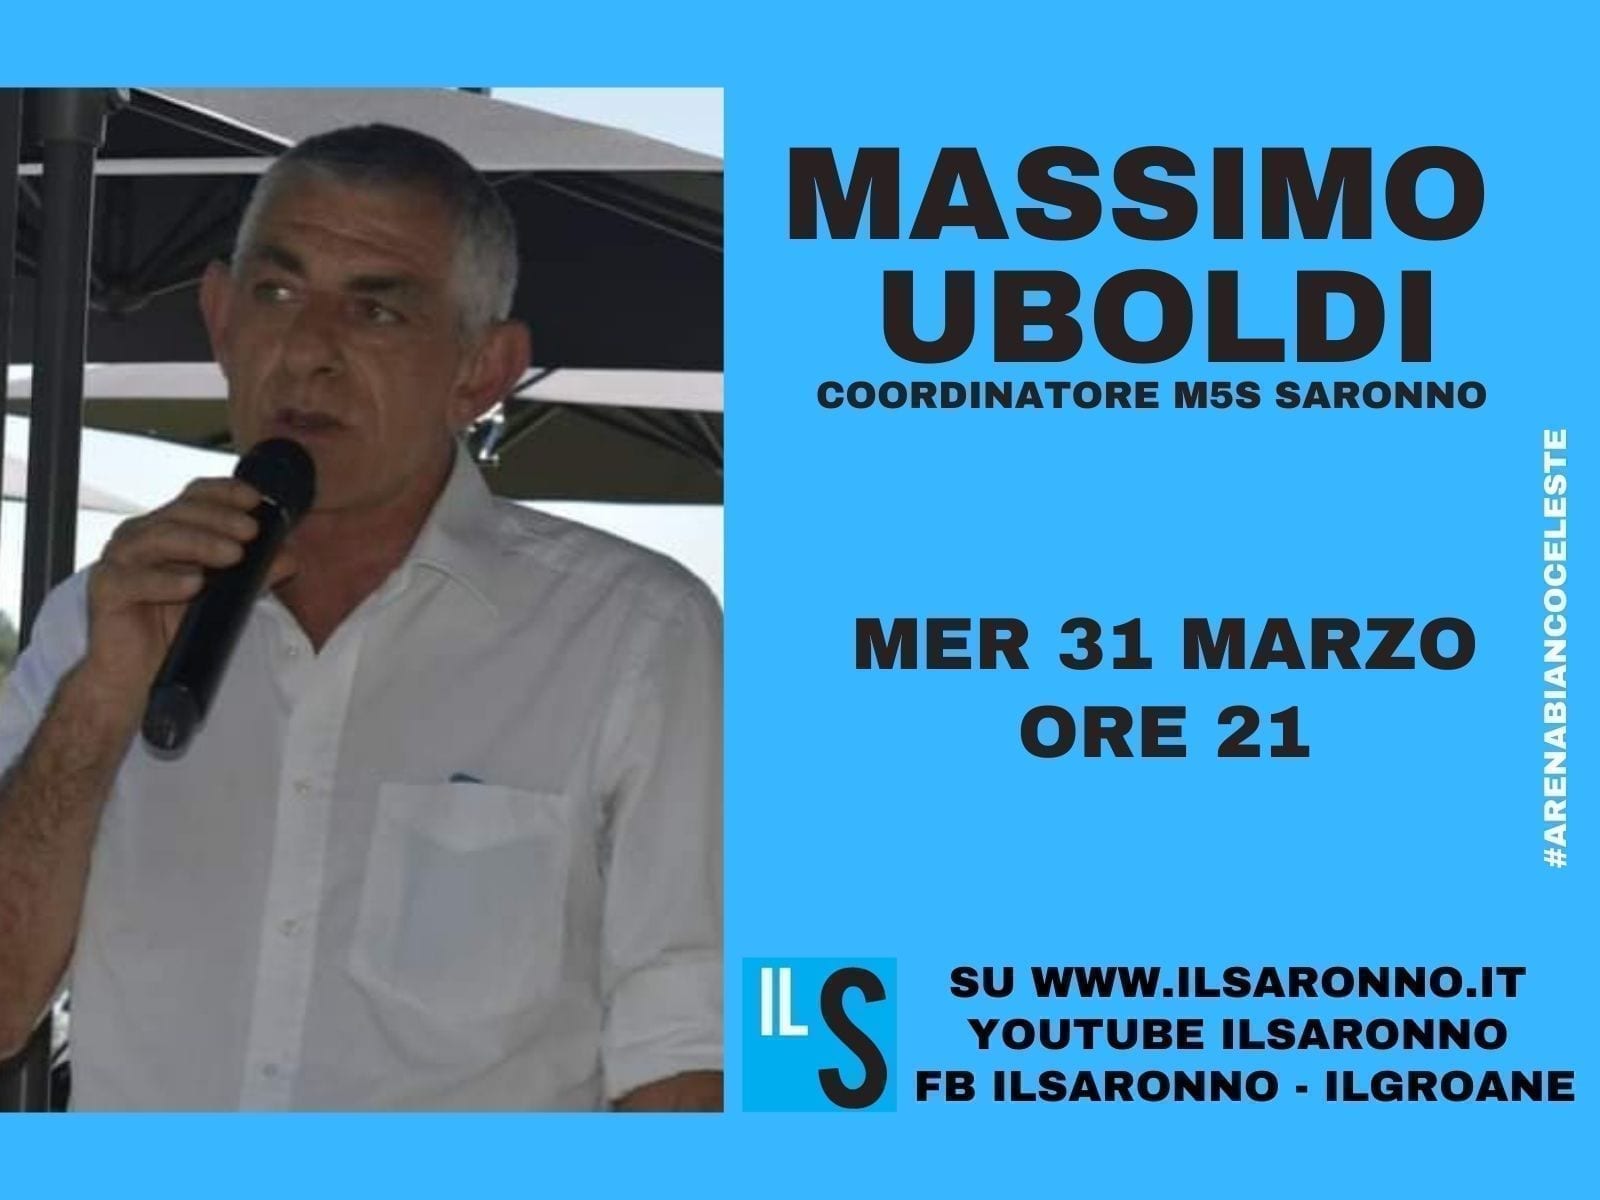 Massimo Uboldi (M5s) protagonista all’Abc: stasera live alle 21